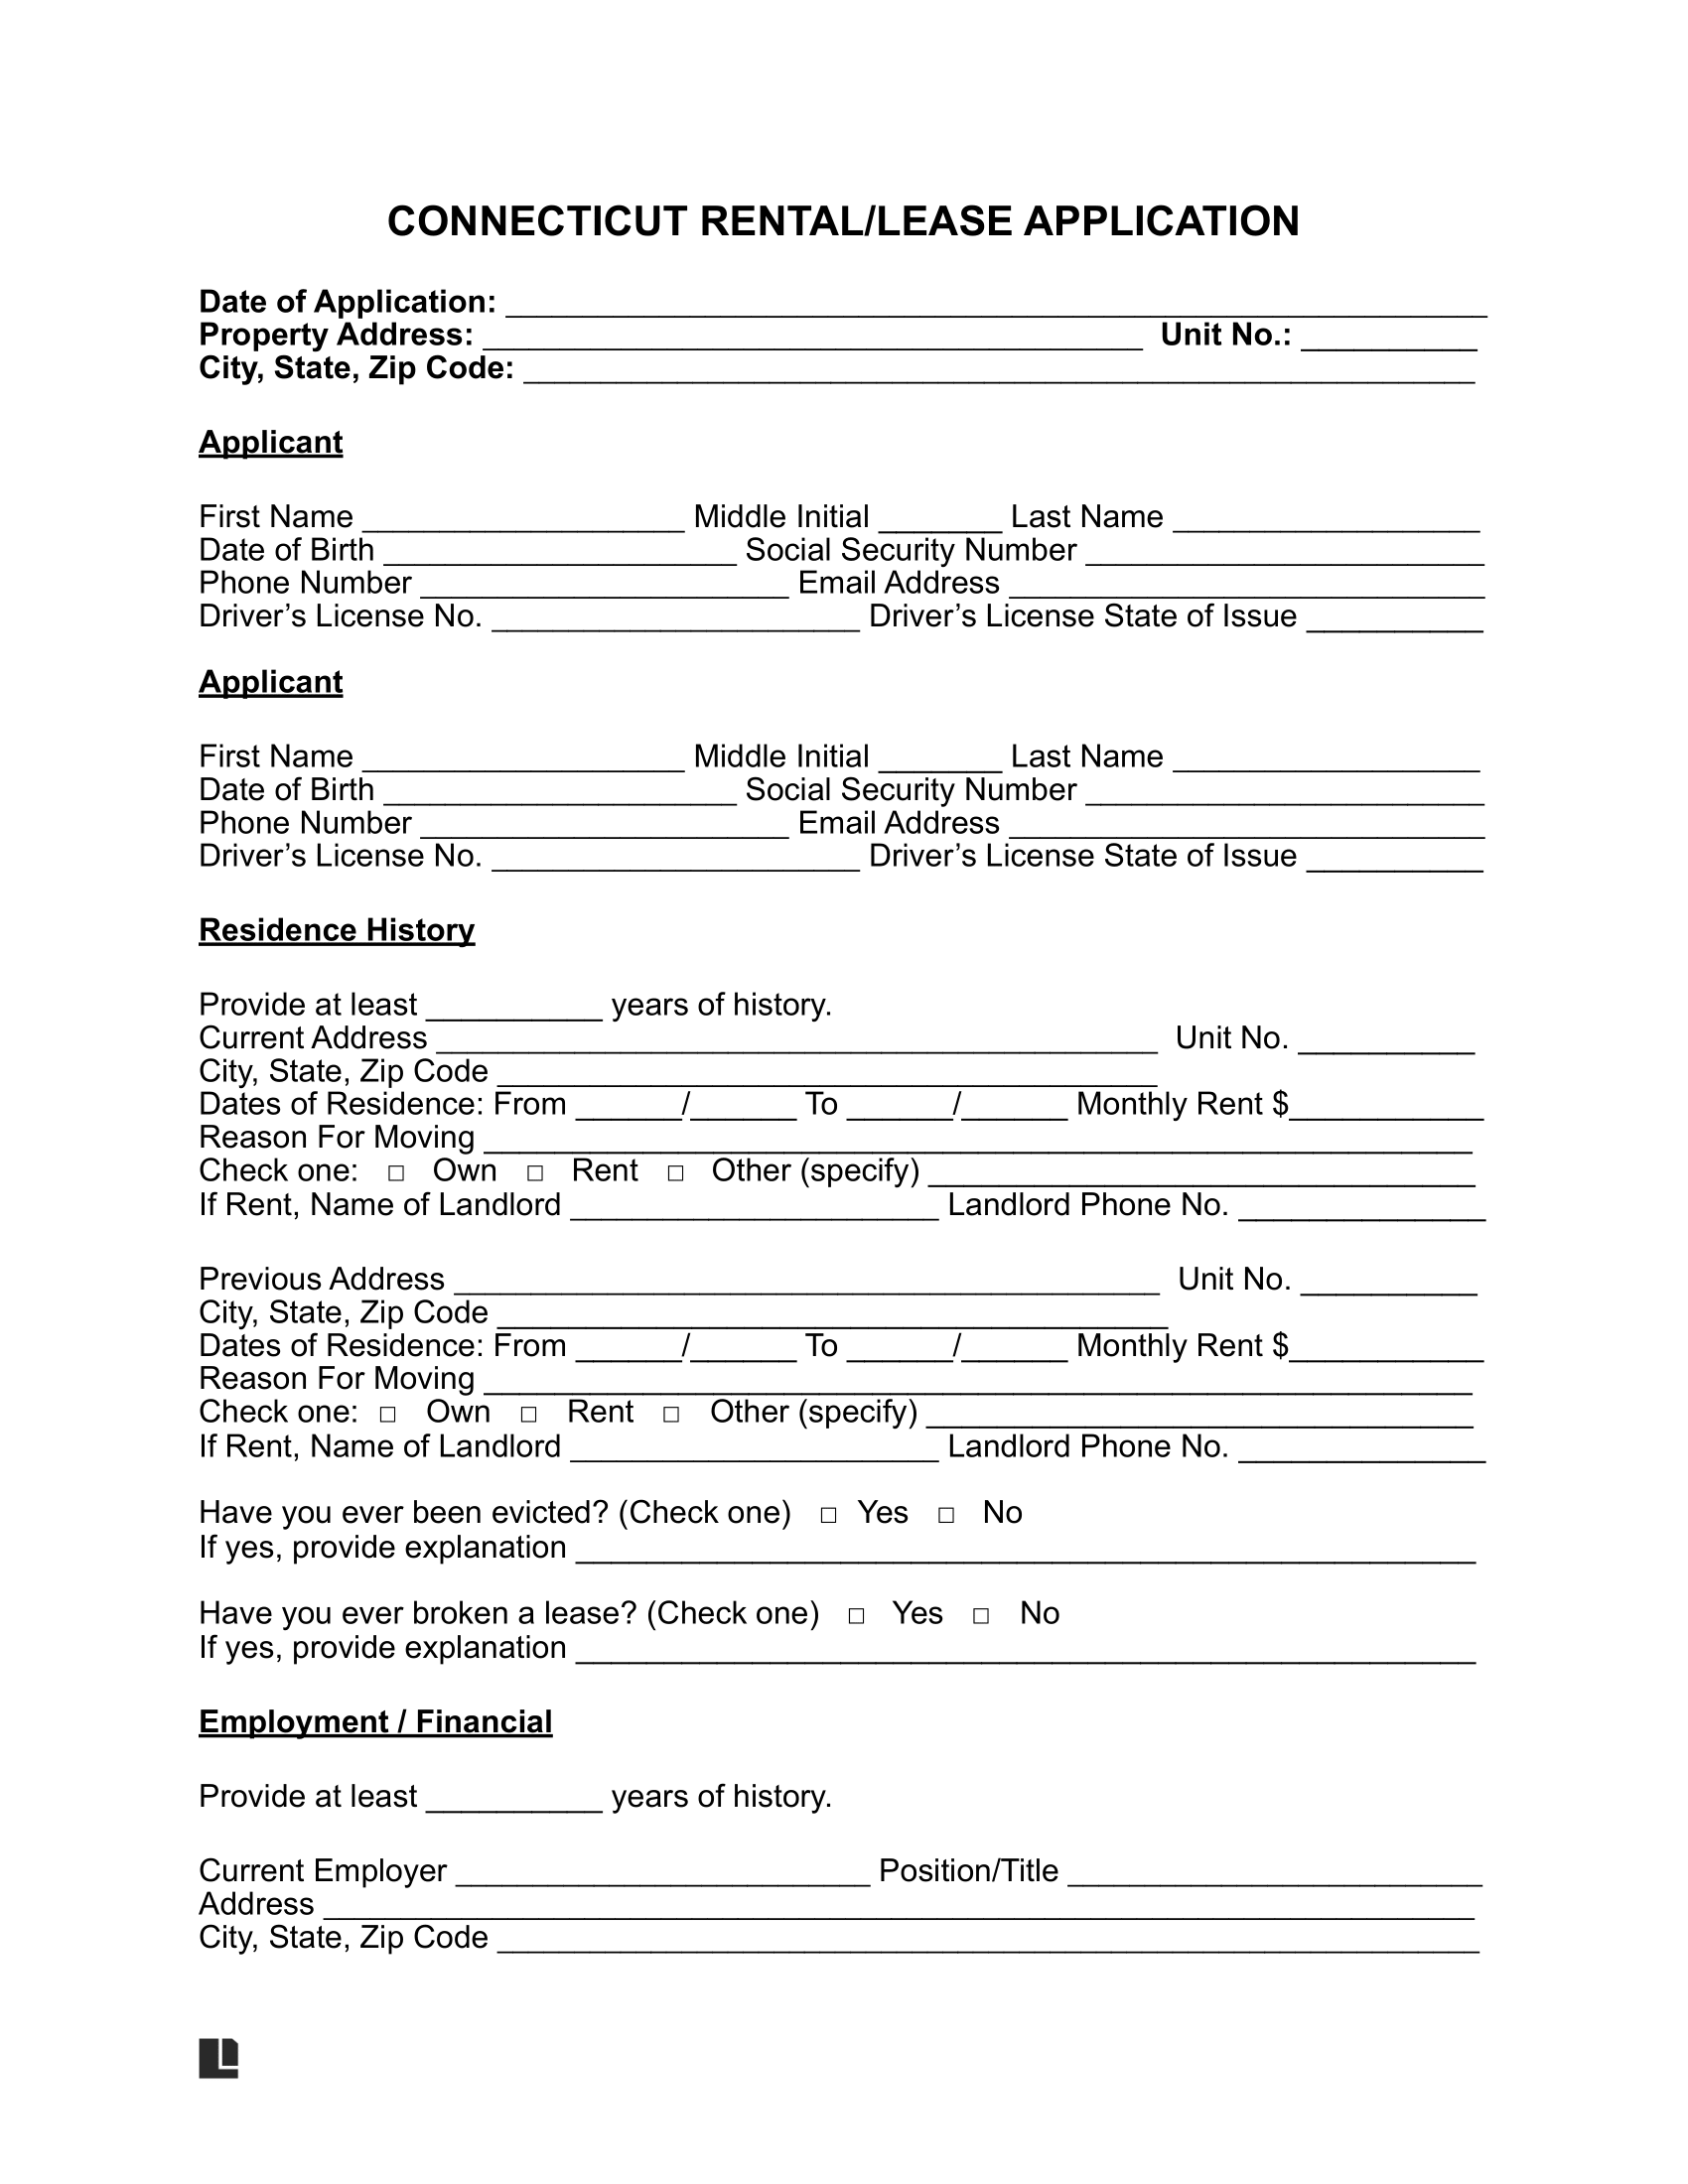 connecticut rental application form